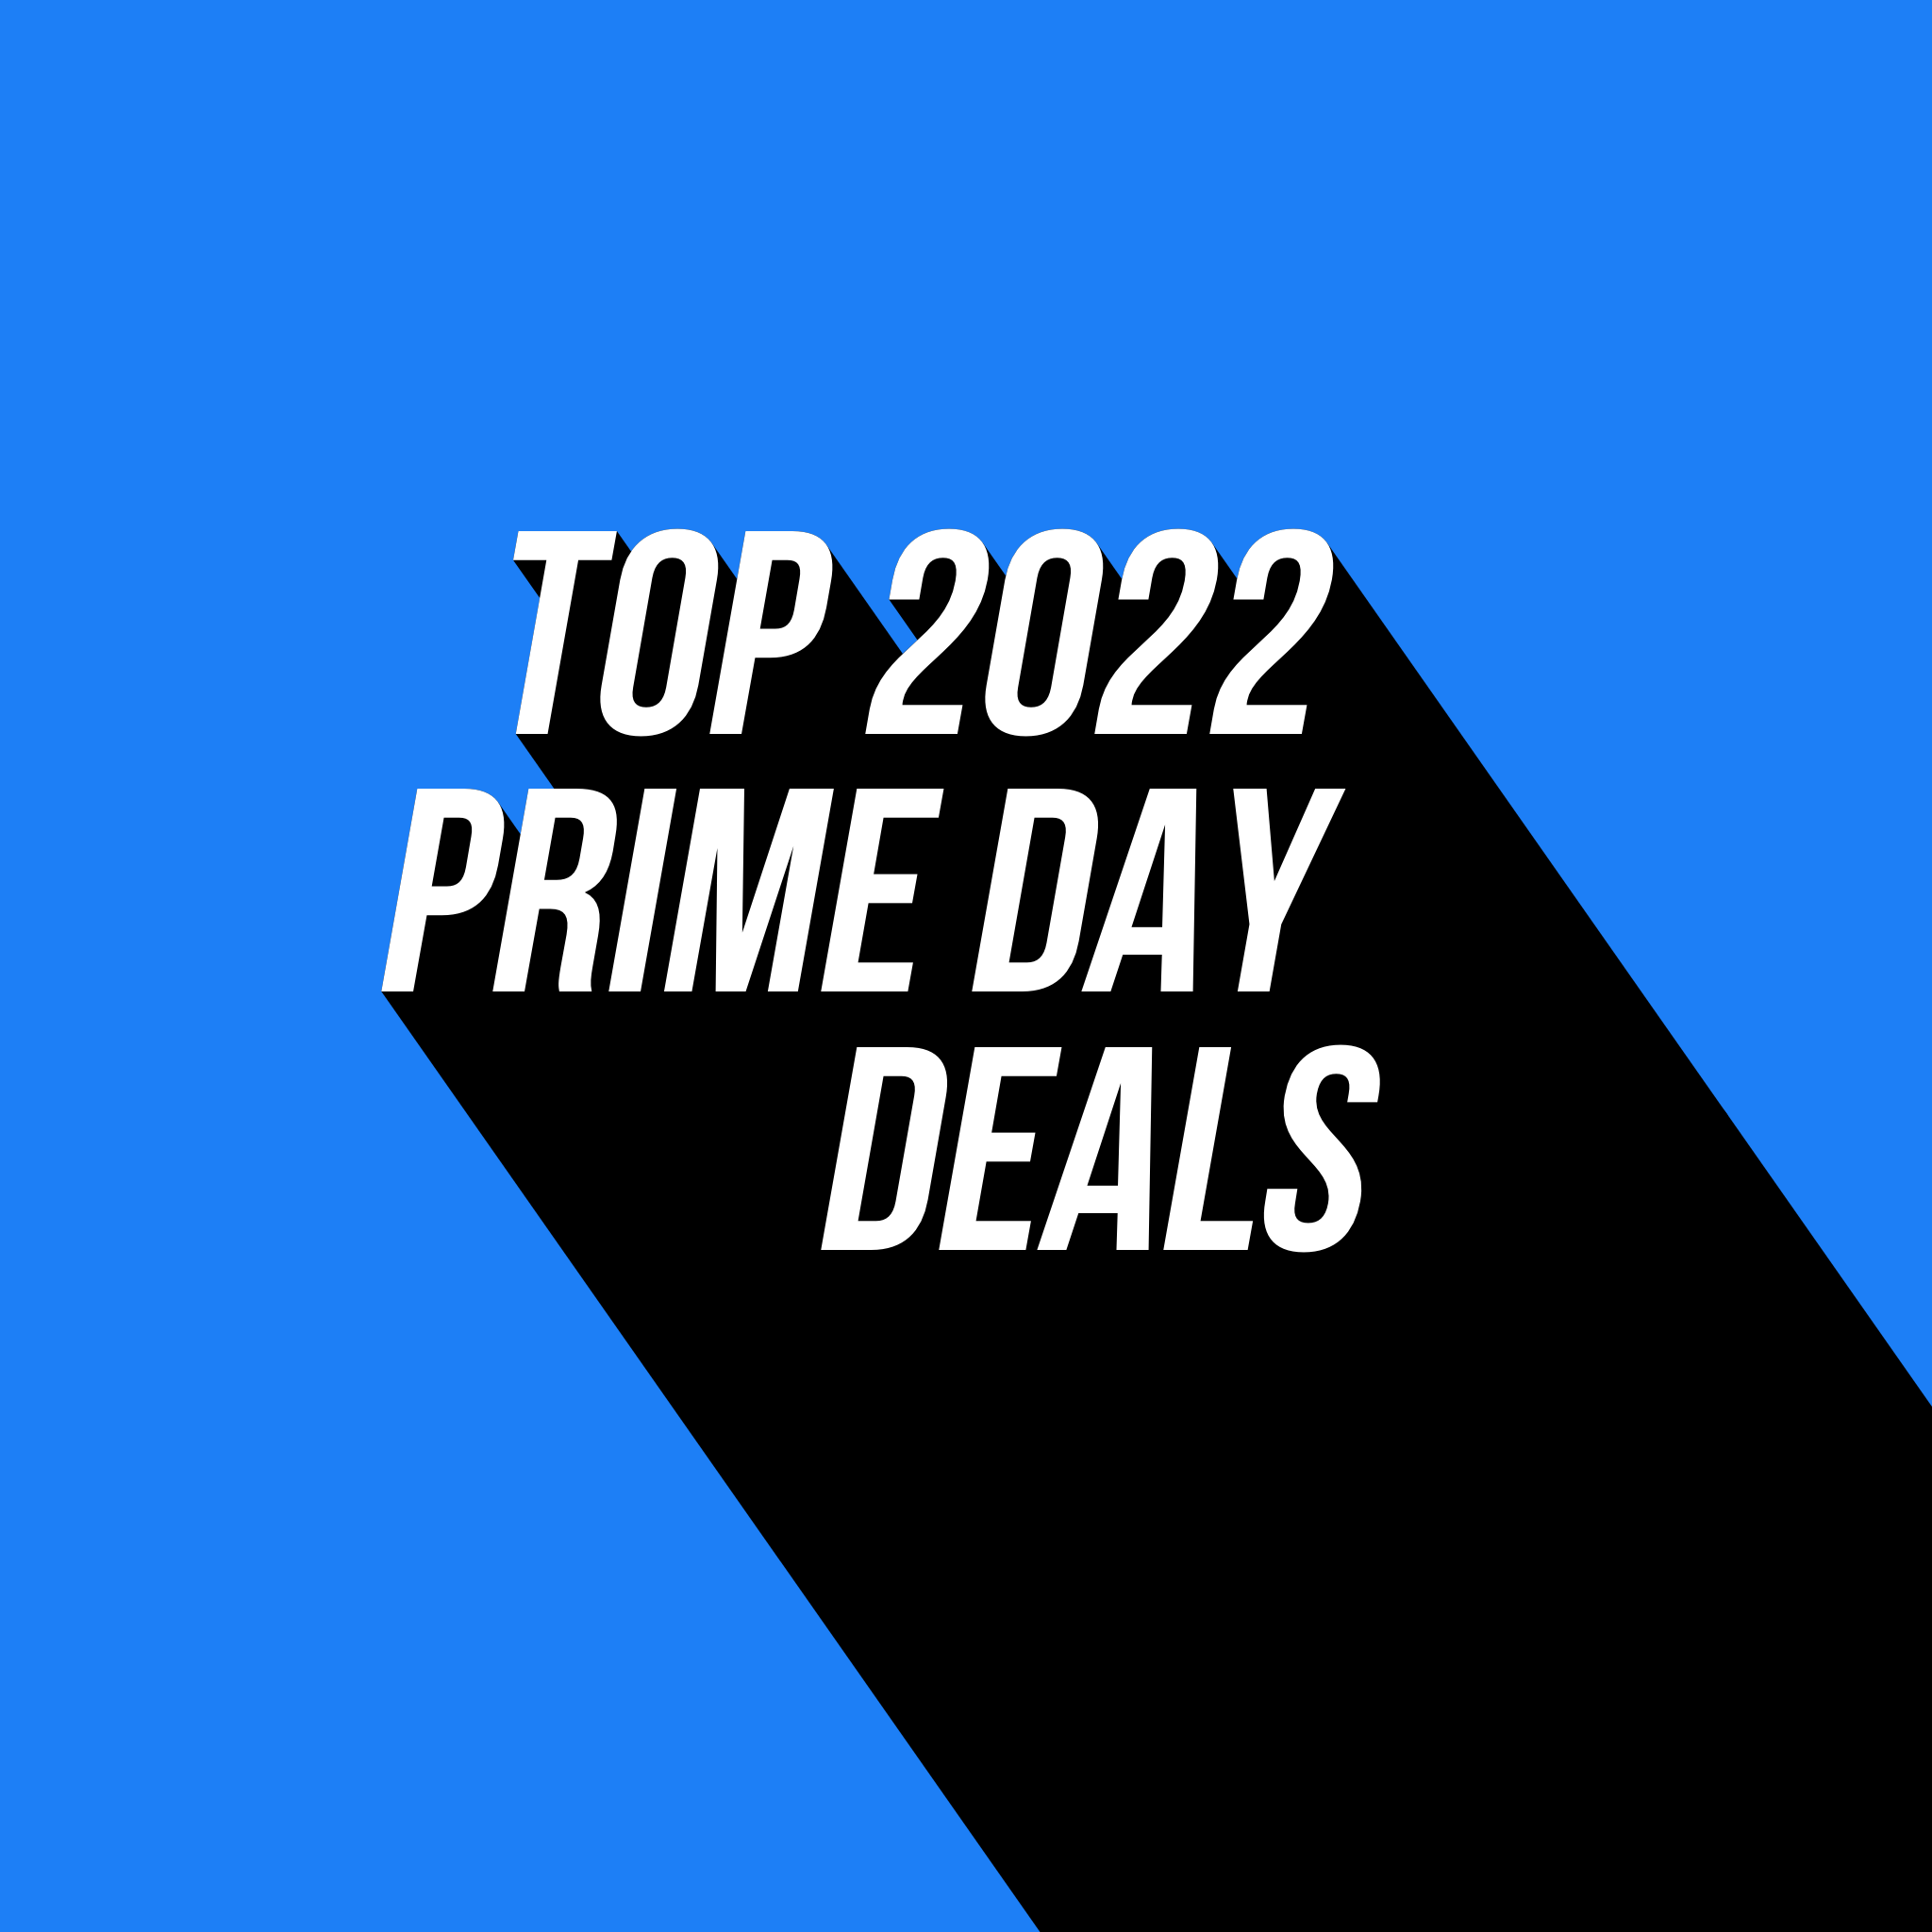 https://images.squarespace-cdn.com/content/v1/55553556e4b0cd4d6a3dbe1f/1657561354218-DW7O2URG18F378JY7NME/top+prime+day+deals+2022.PNG